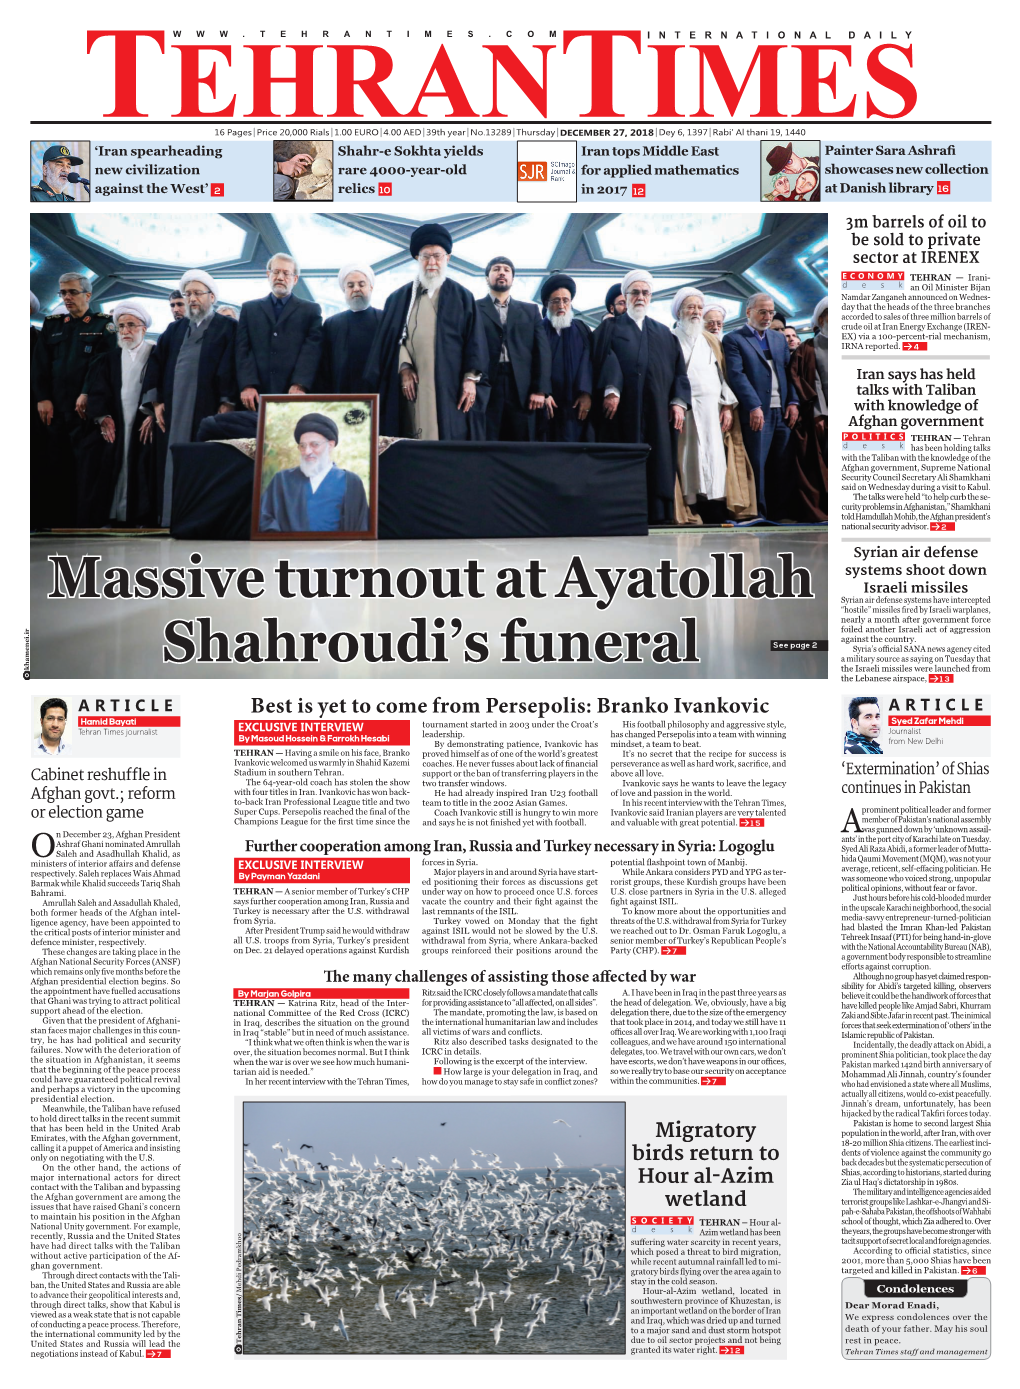 Massive Turnout at Ayatollah Shahroudi's Funeral